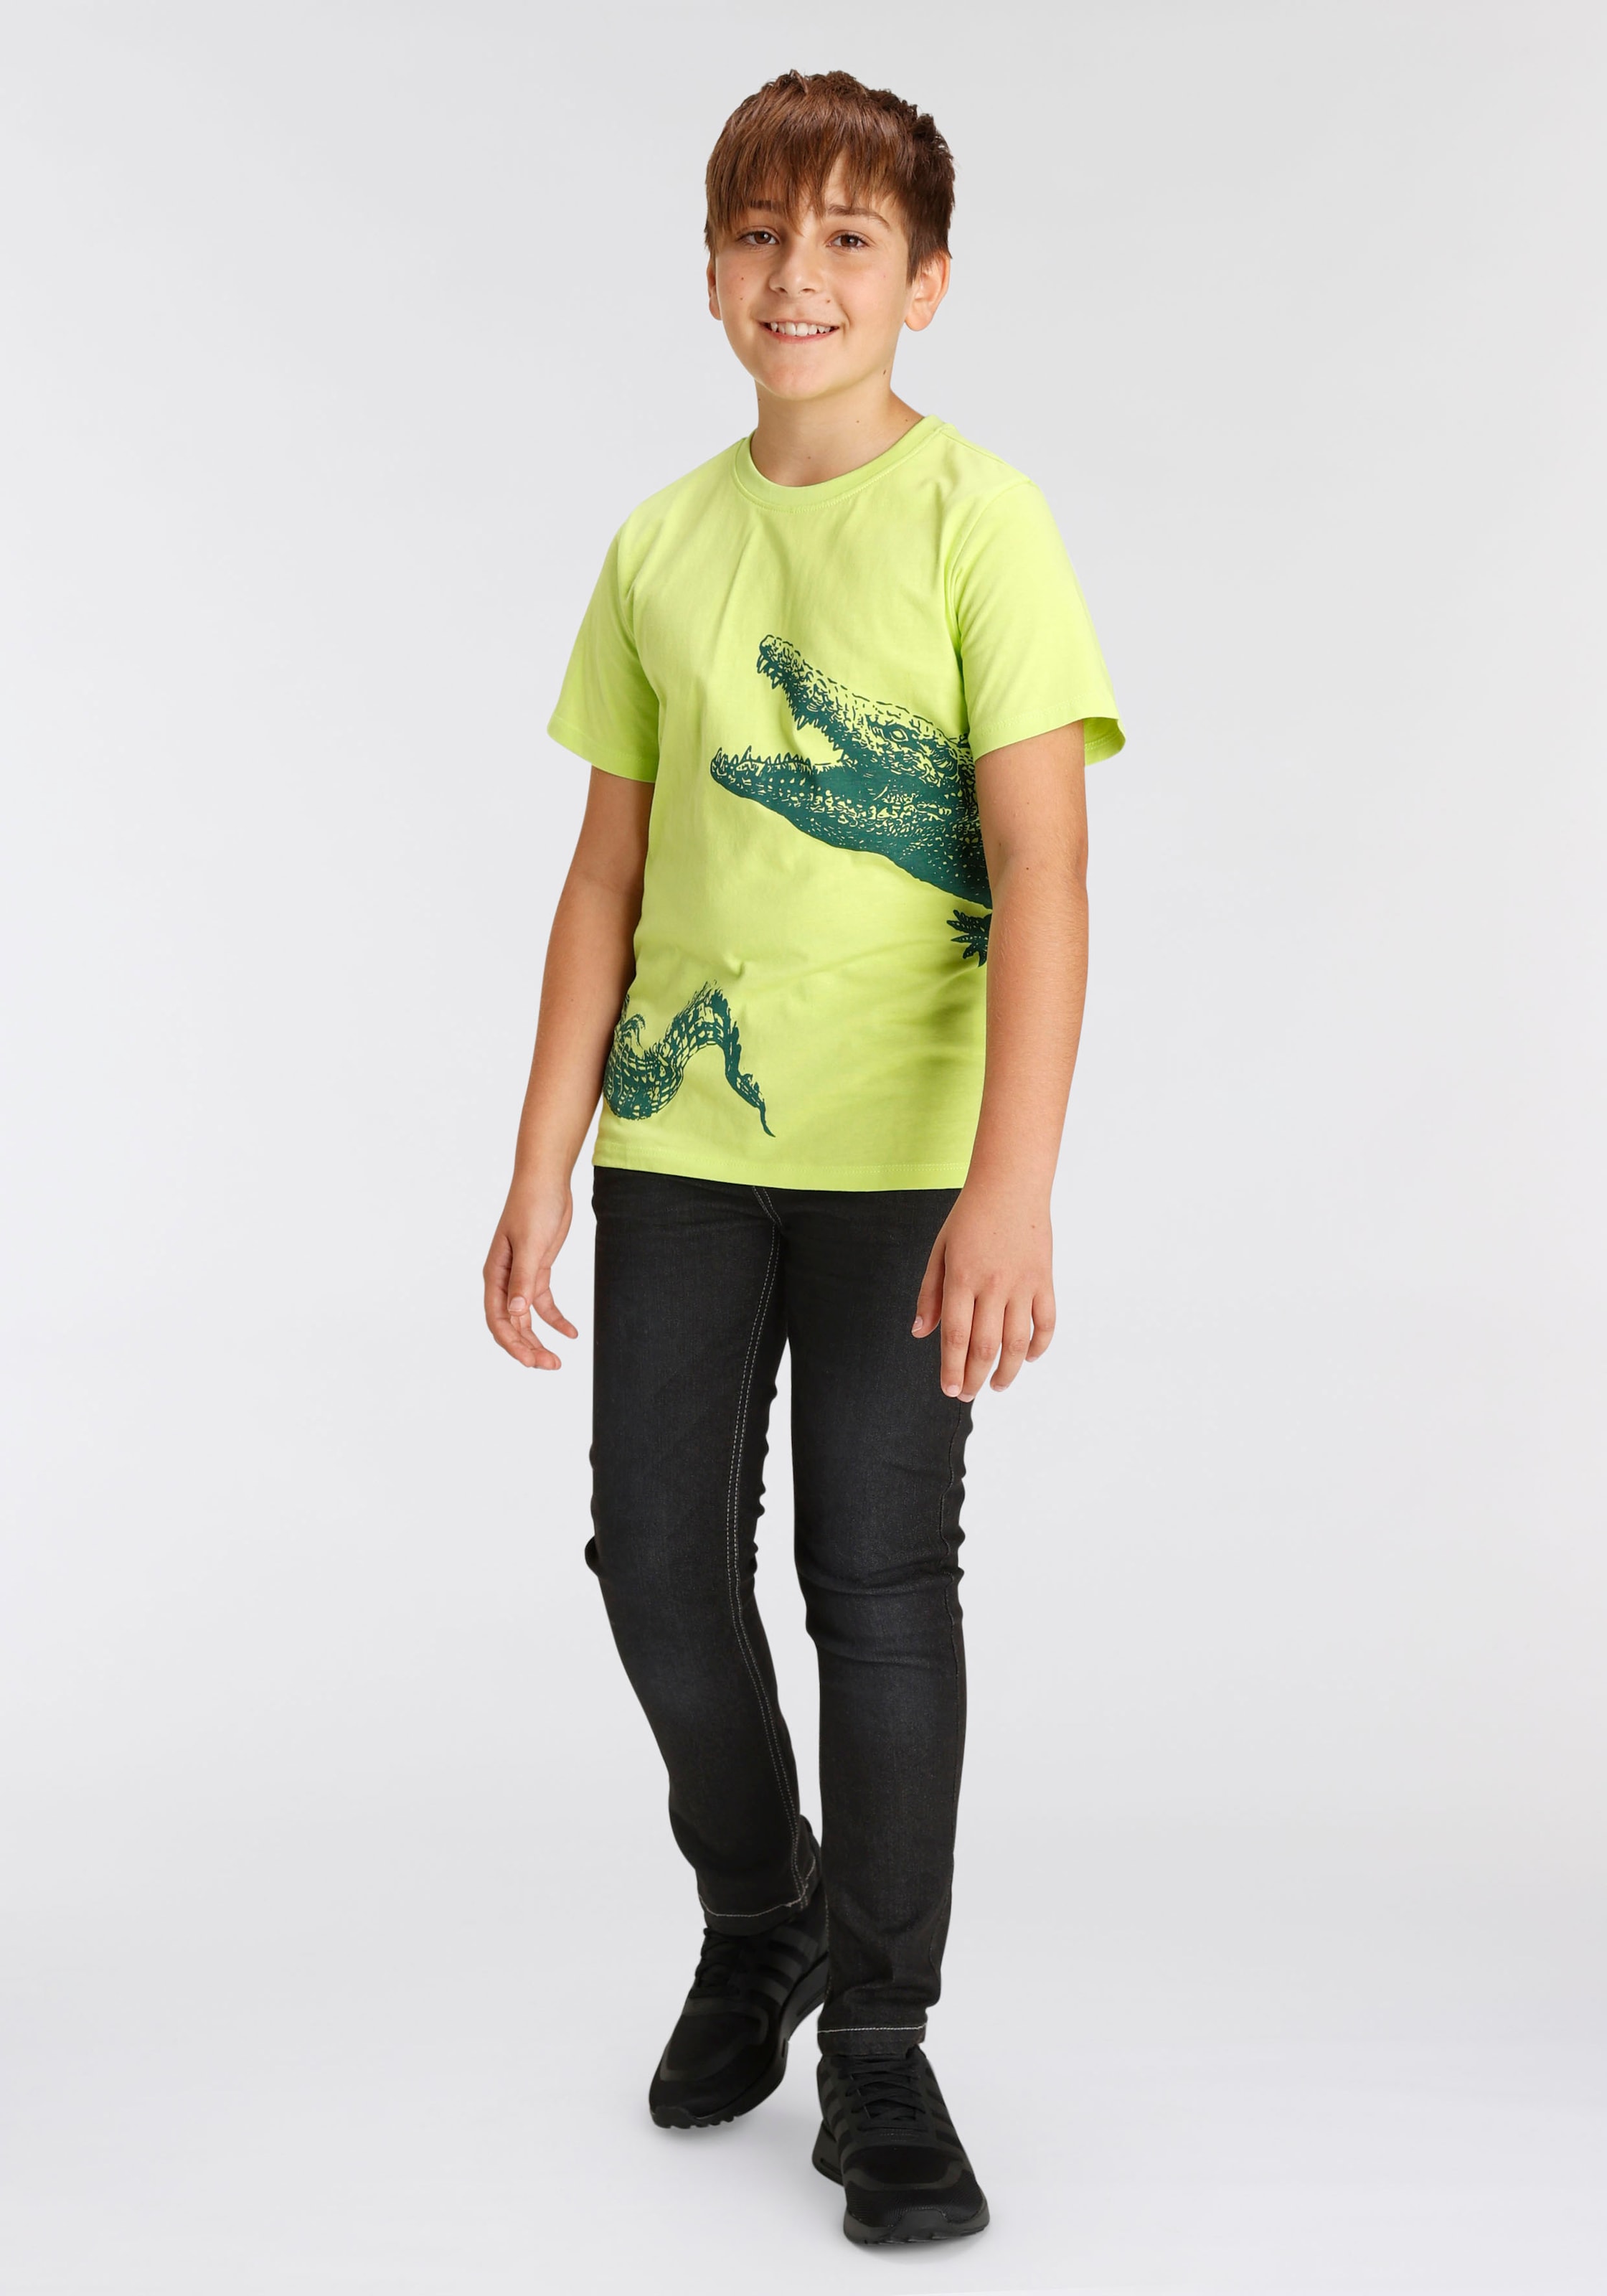 T-Shirt Trendige bestellen versandkostenfrei »KROKODIL« KIDSWORLD